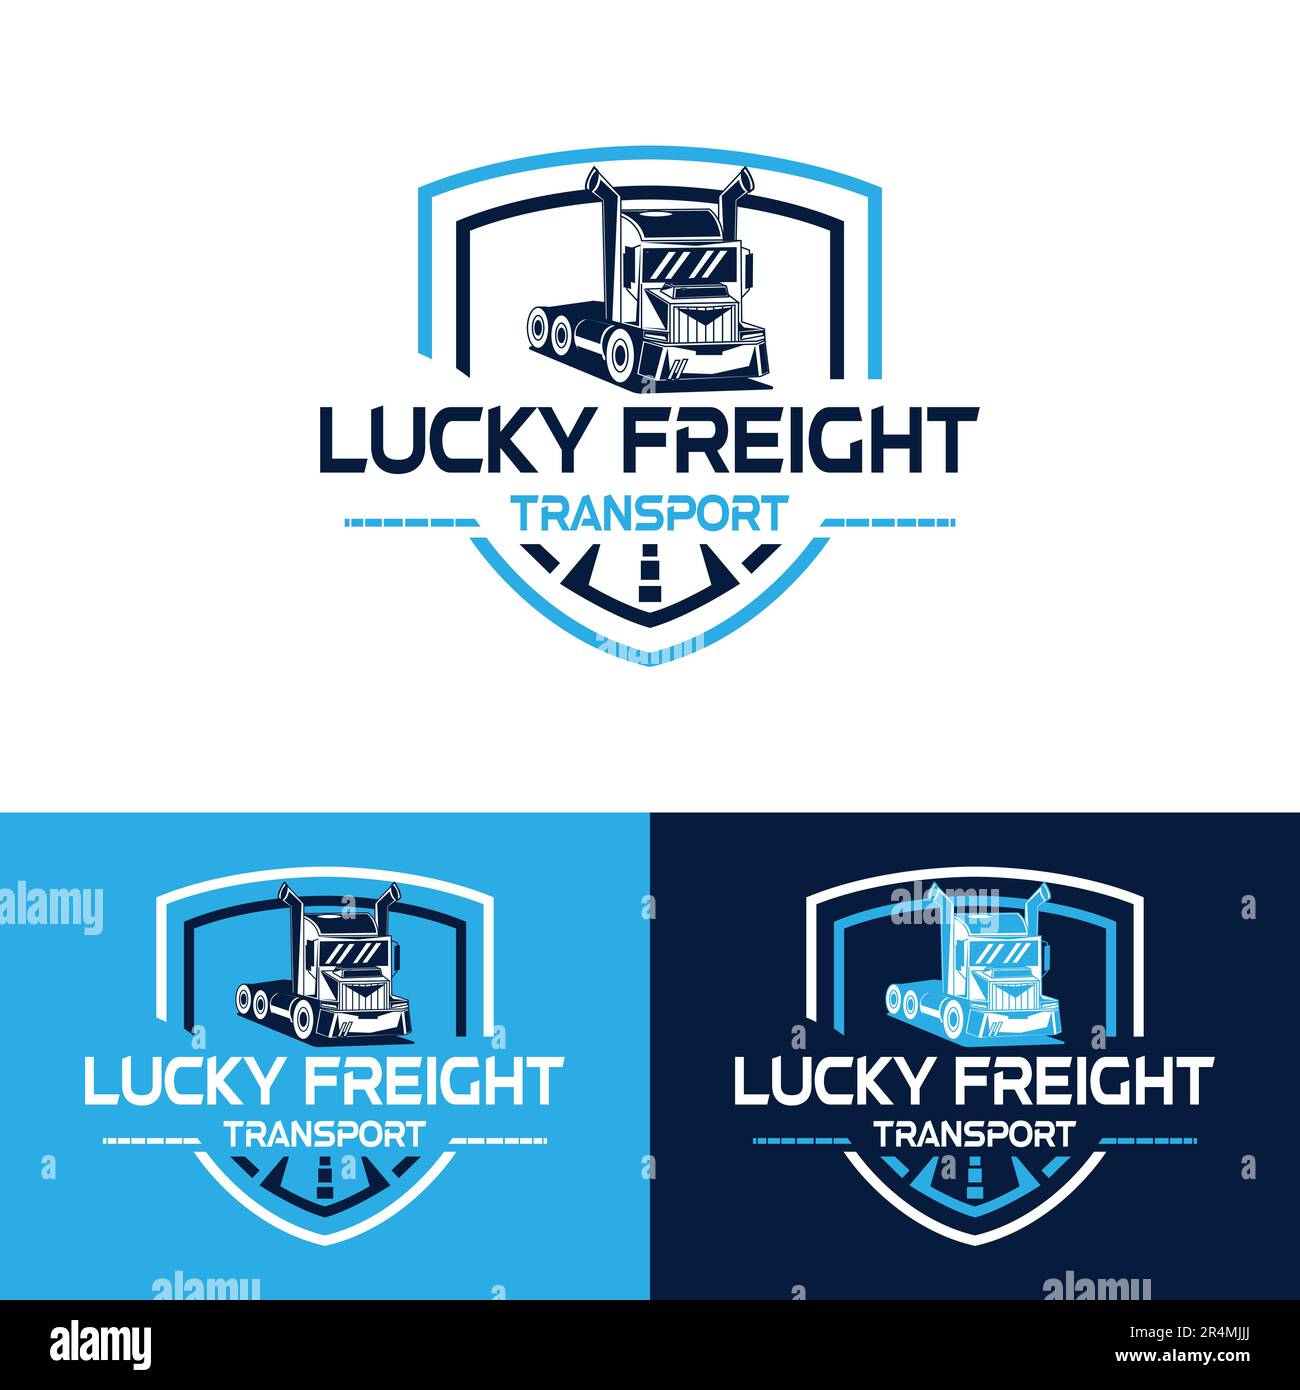 Lucky Freight vintage logo design in vector Stock Vector Image & Art ...